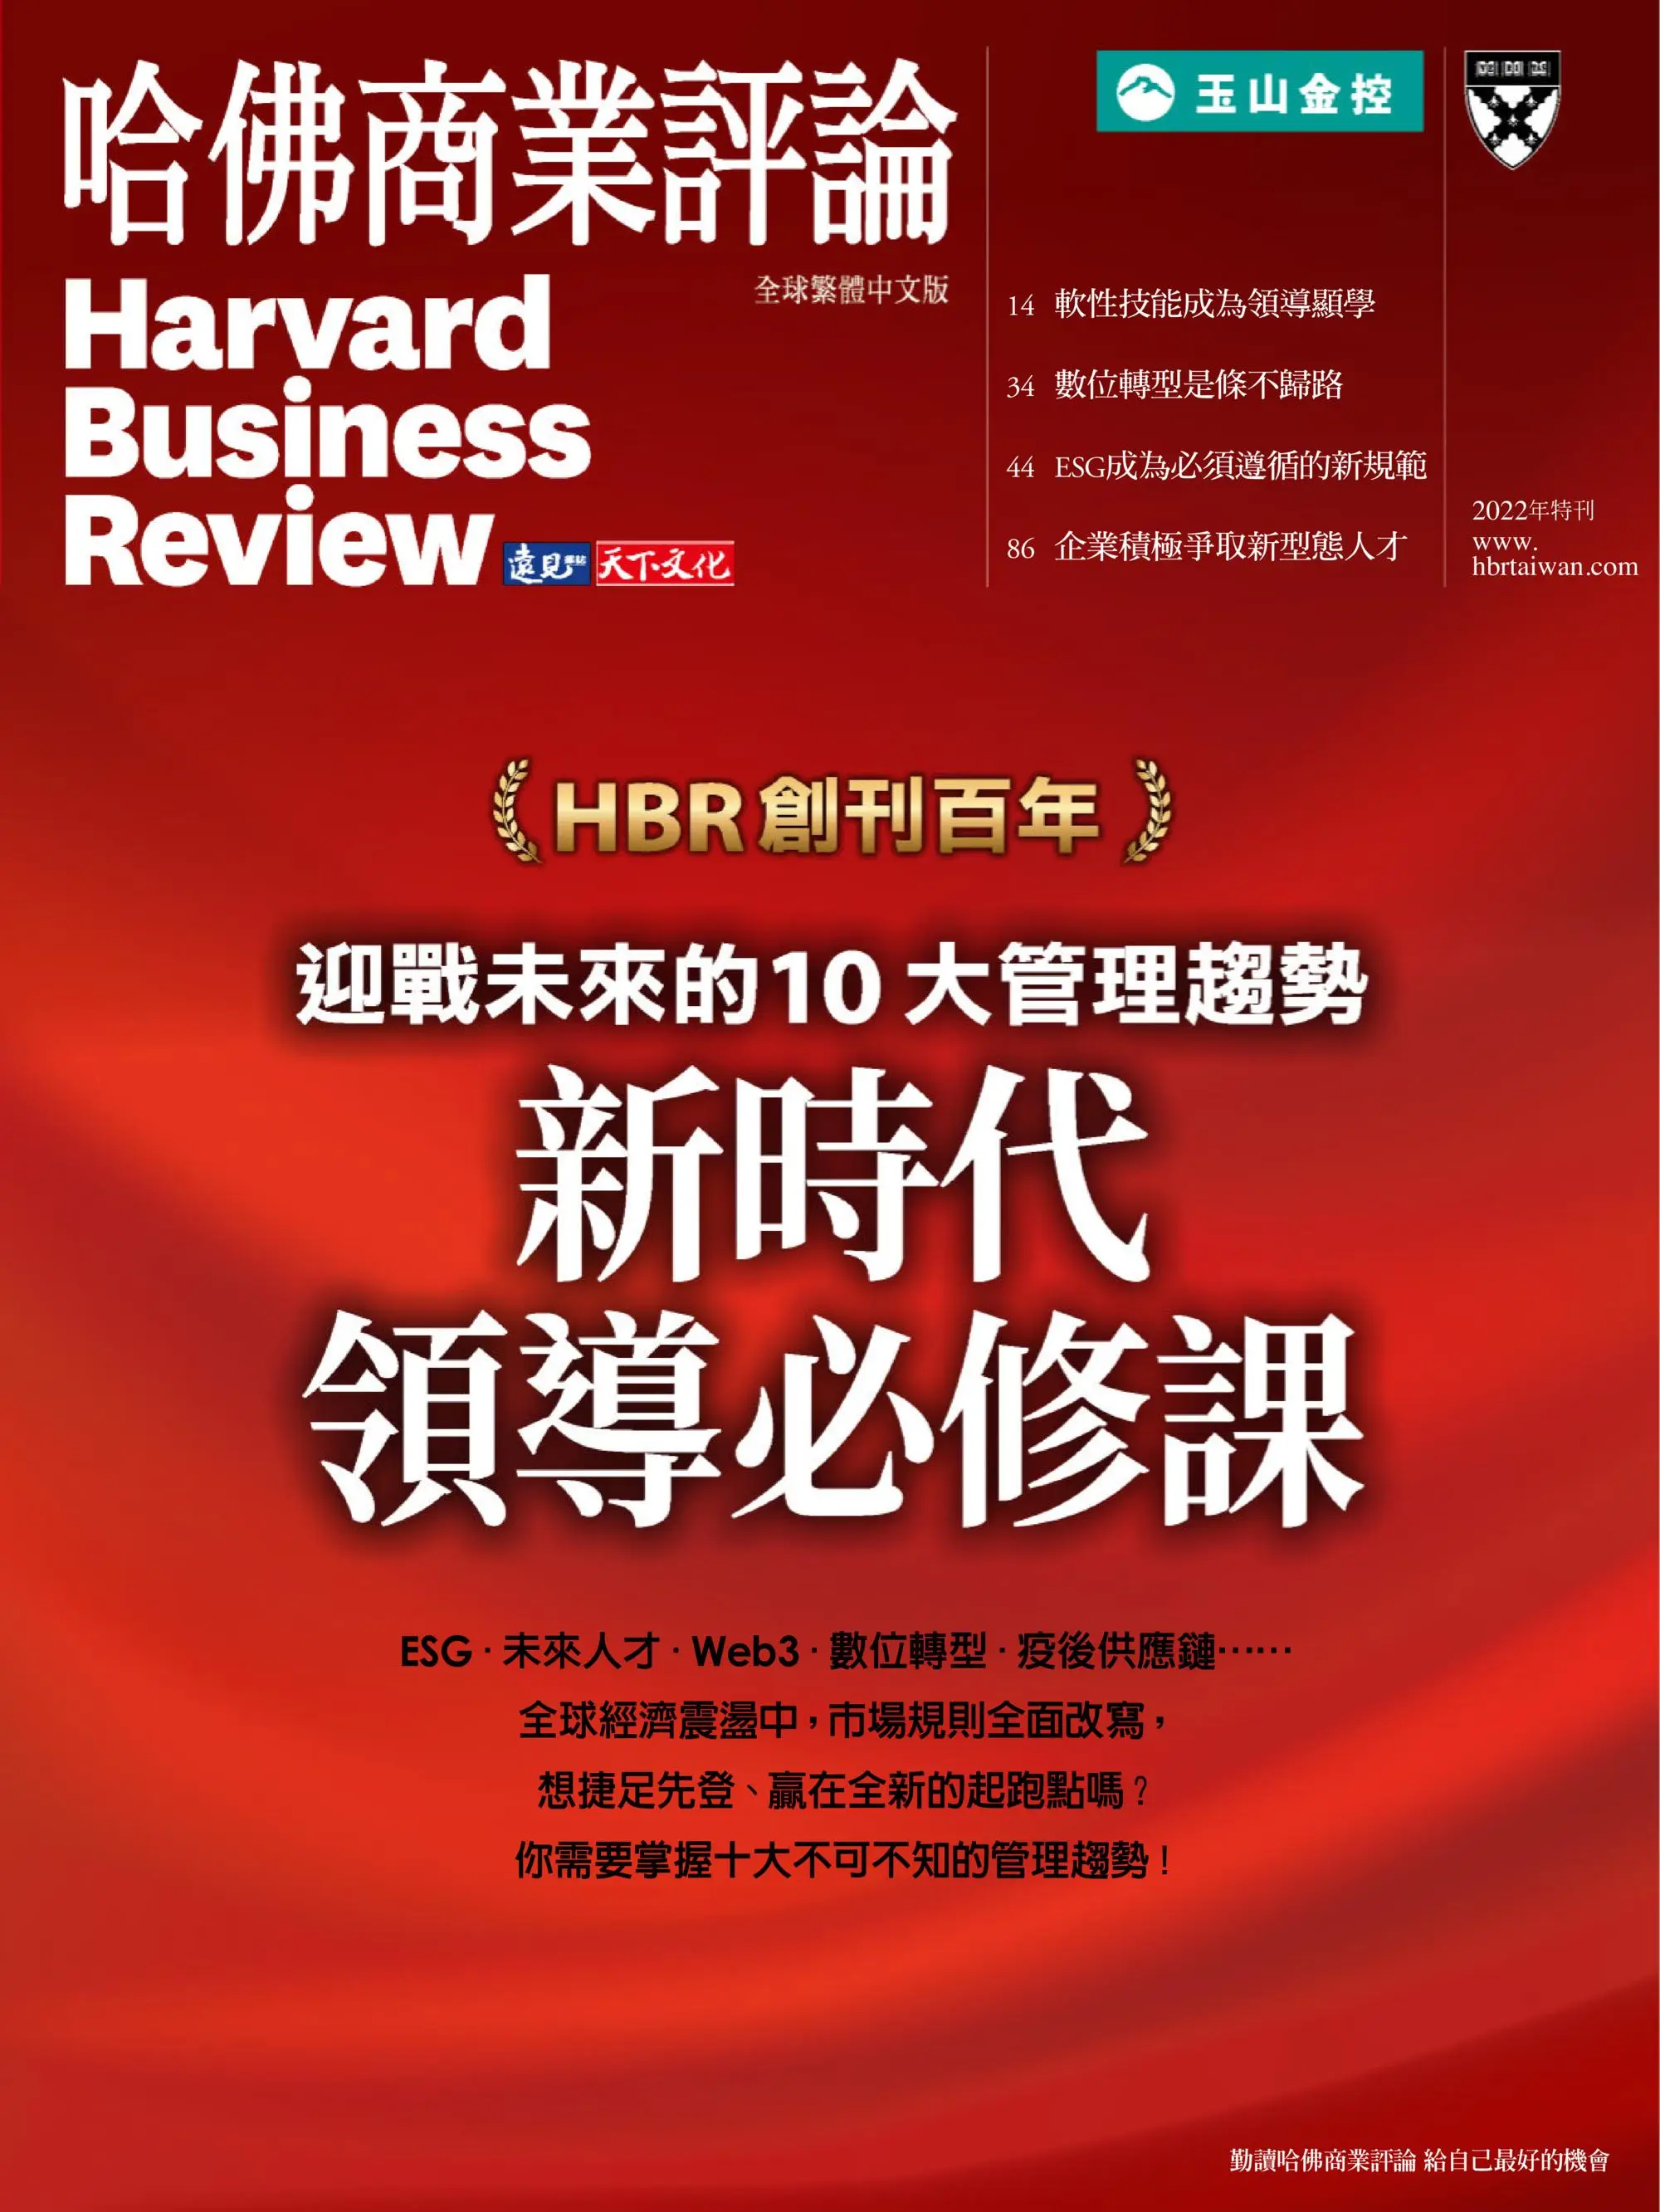 Harvard Business Review 哈佛商業評論特刊 2022年9月